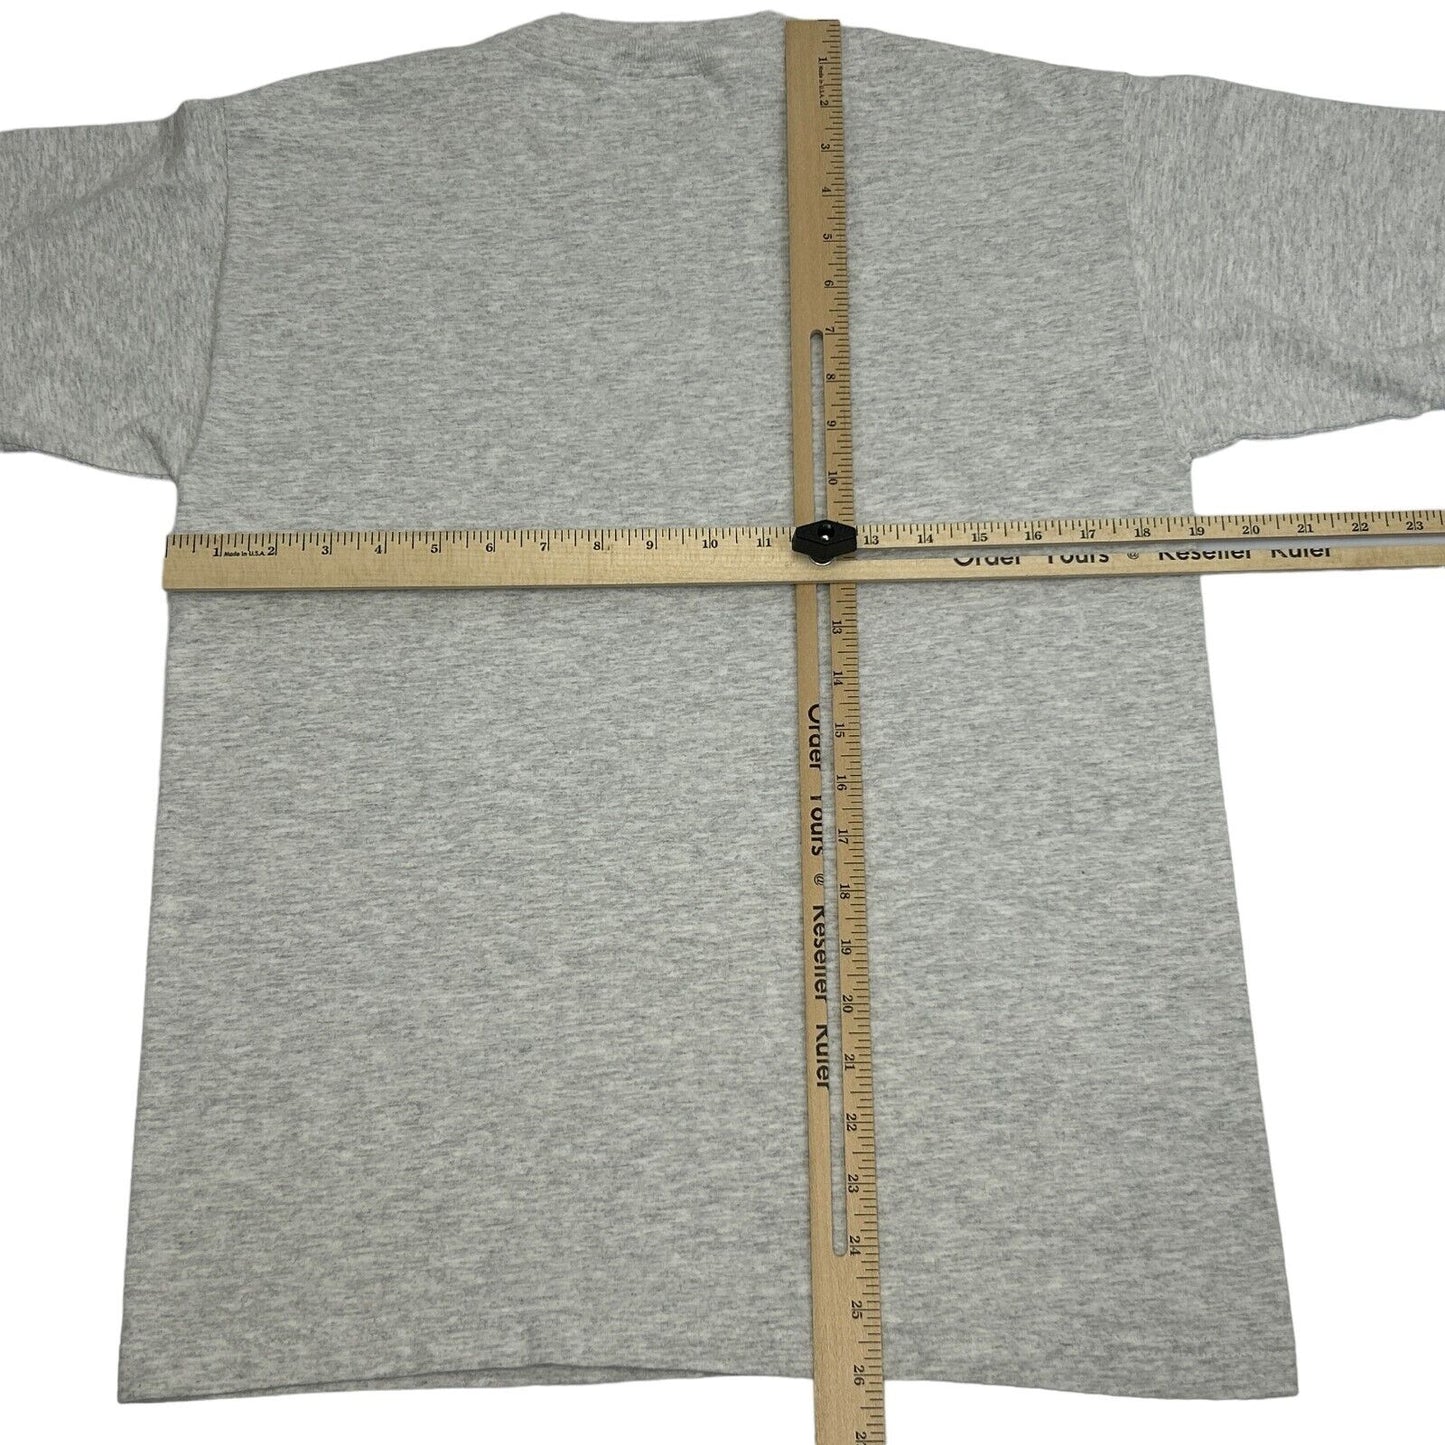 University of Michigan Law School Vintage 90s T Shirt Medium MLS Tee Mens Gray